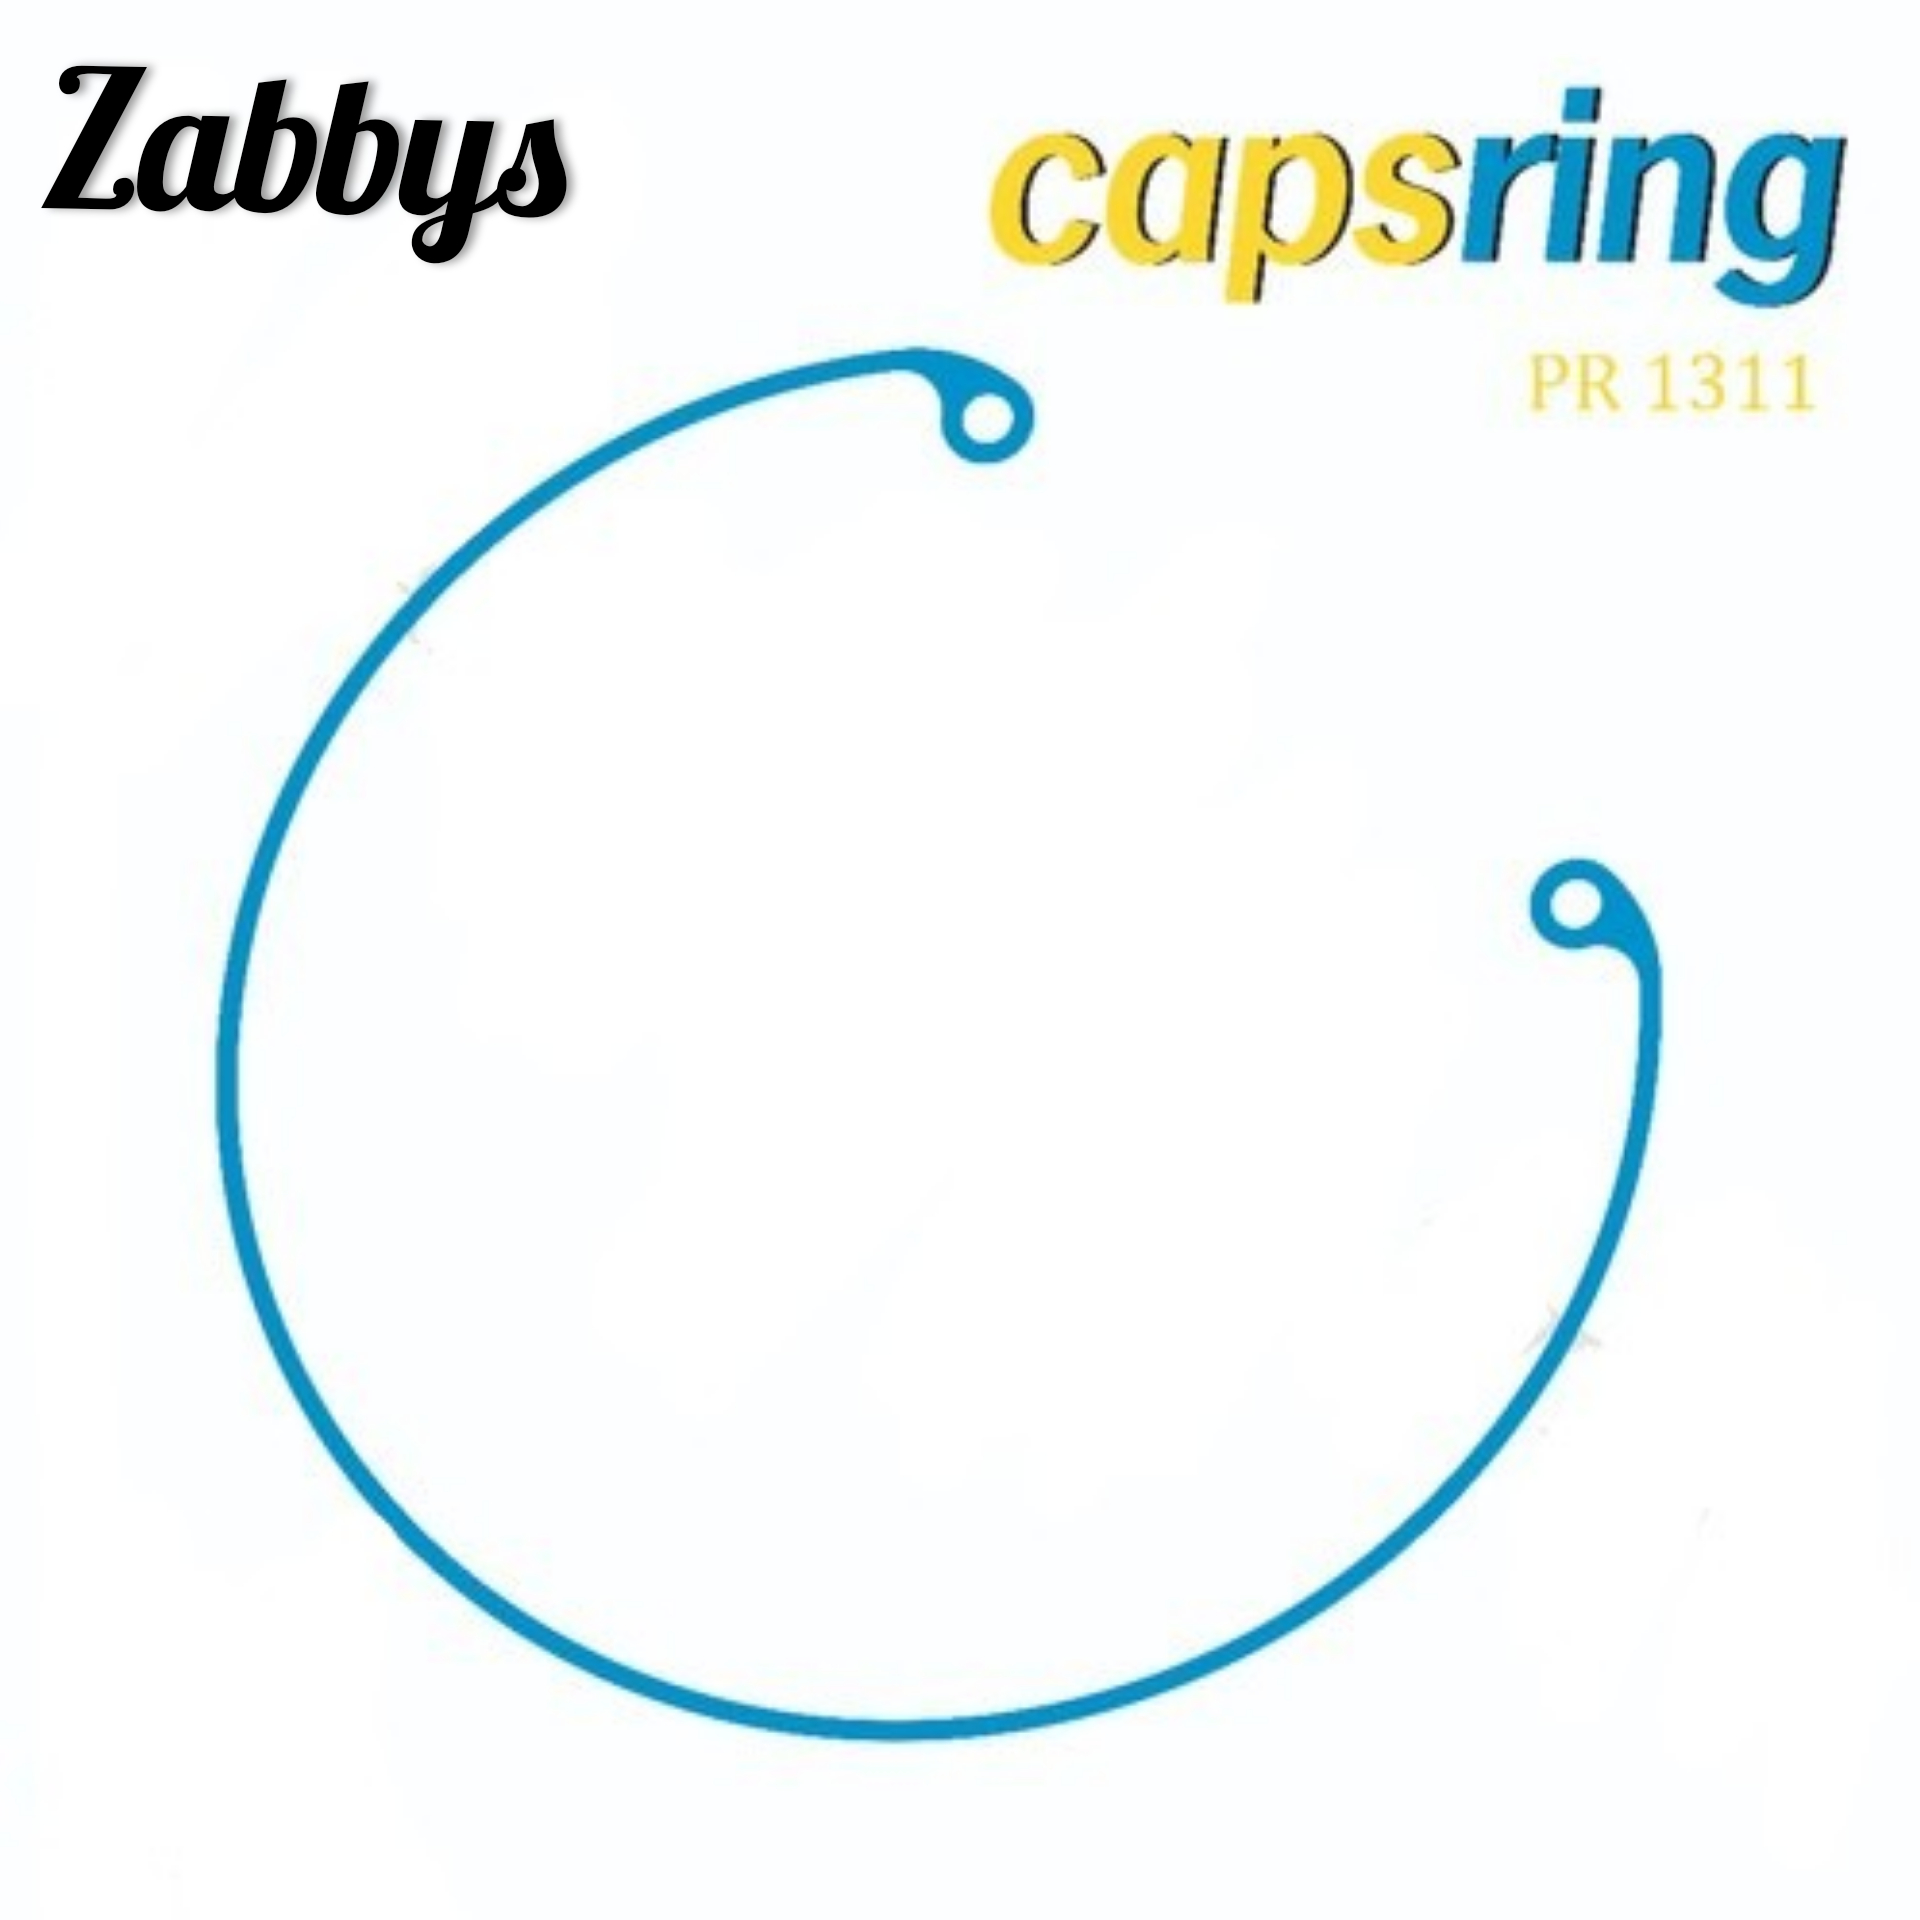 Zabbys Caps Ring